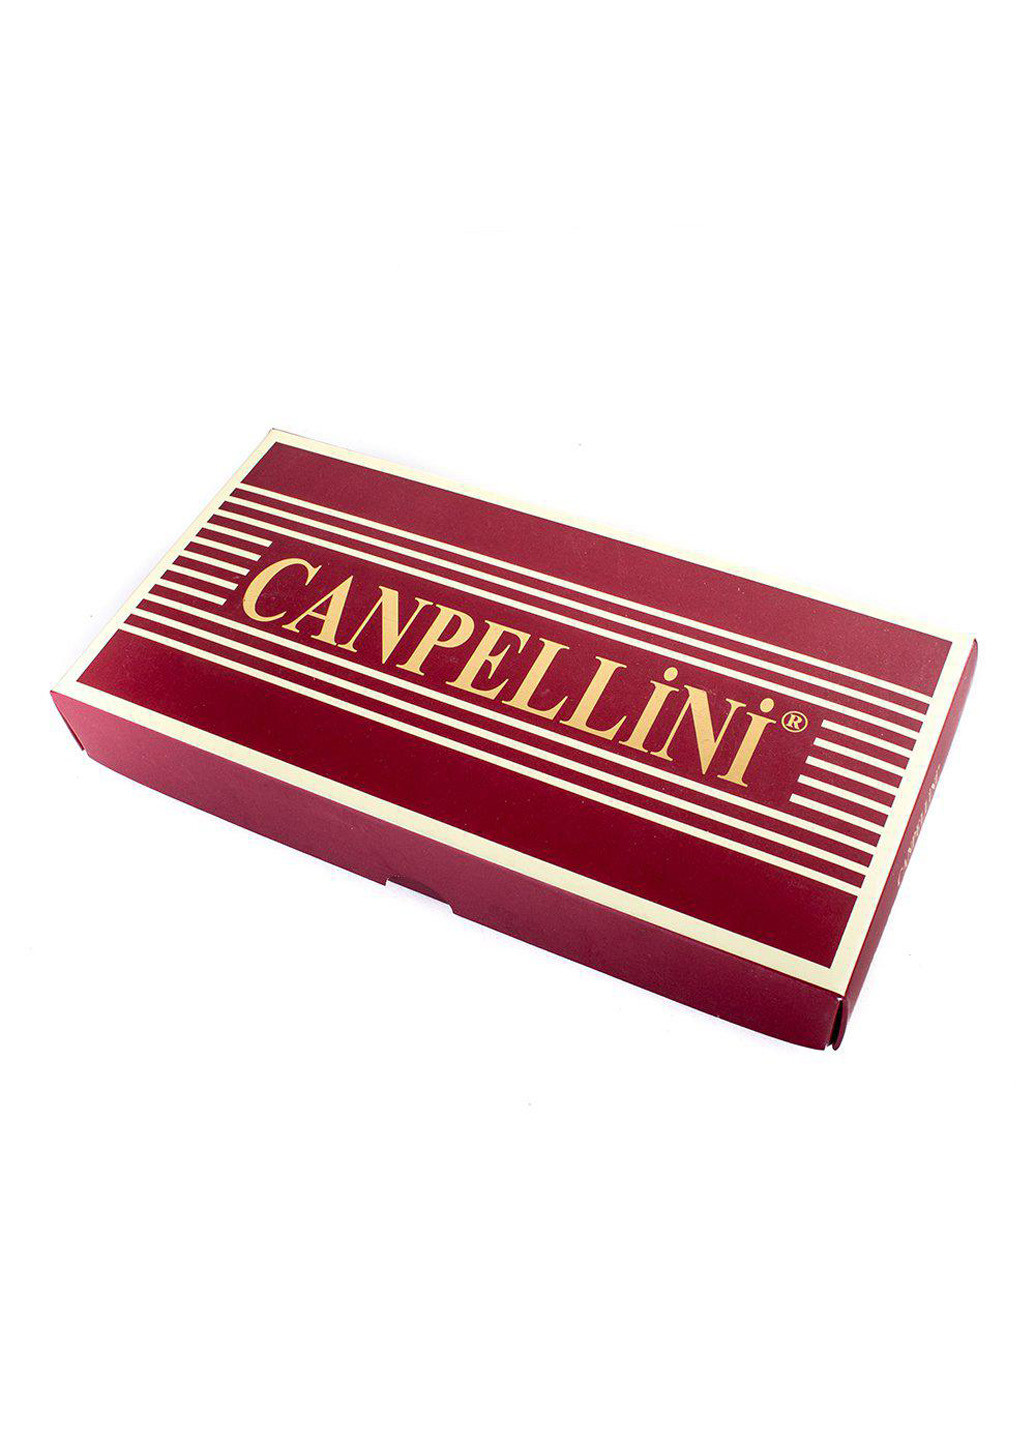 Женский кожаный кошелек 18,8х9,7х2,2 см Canpellini (195547304)